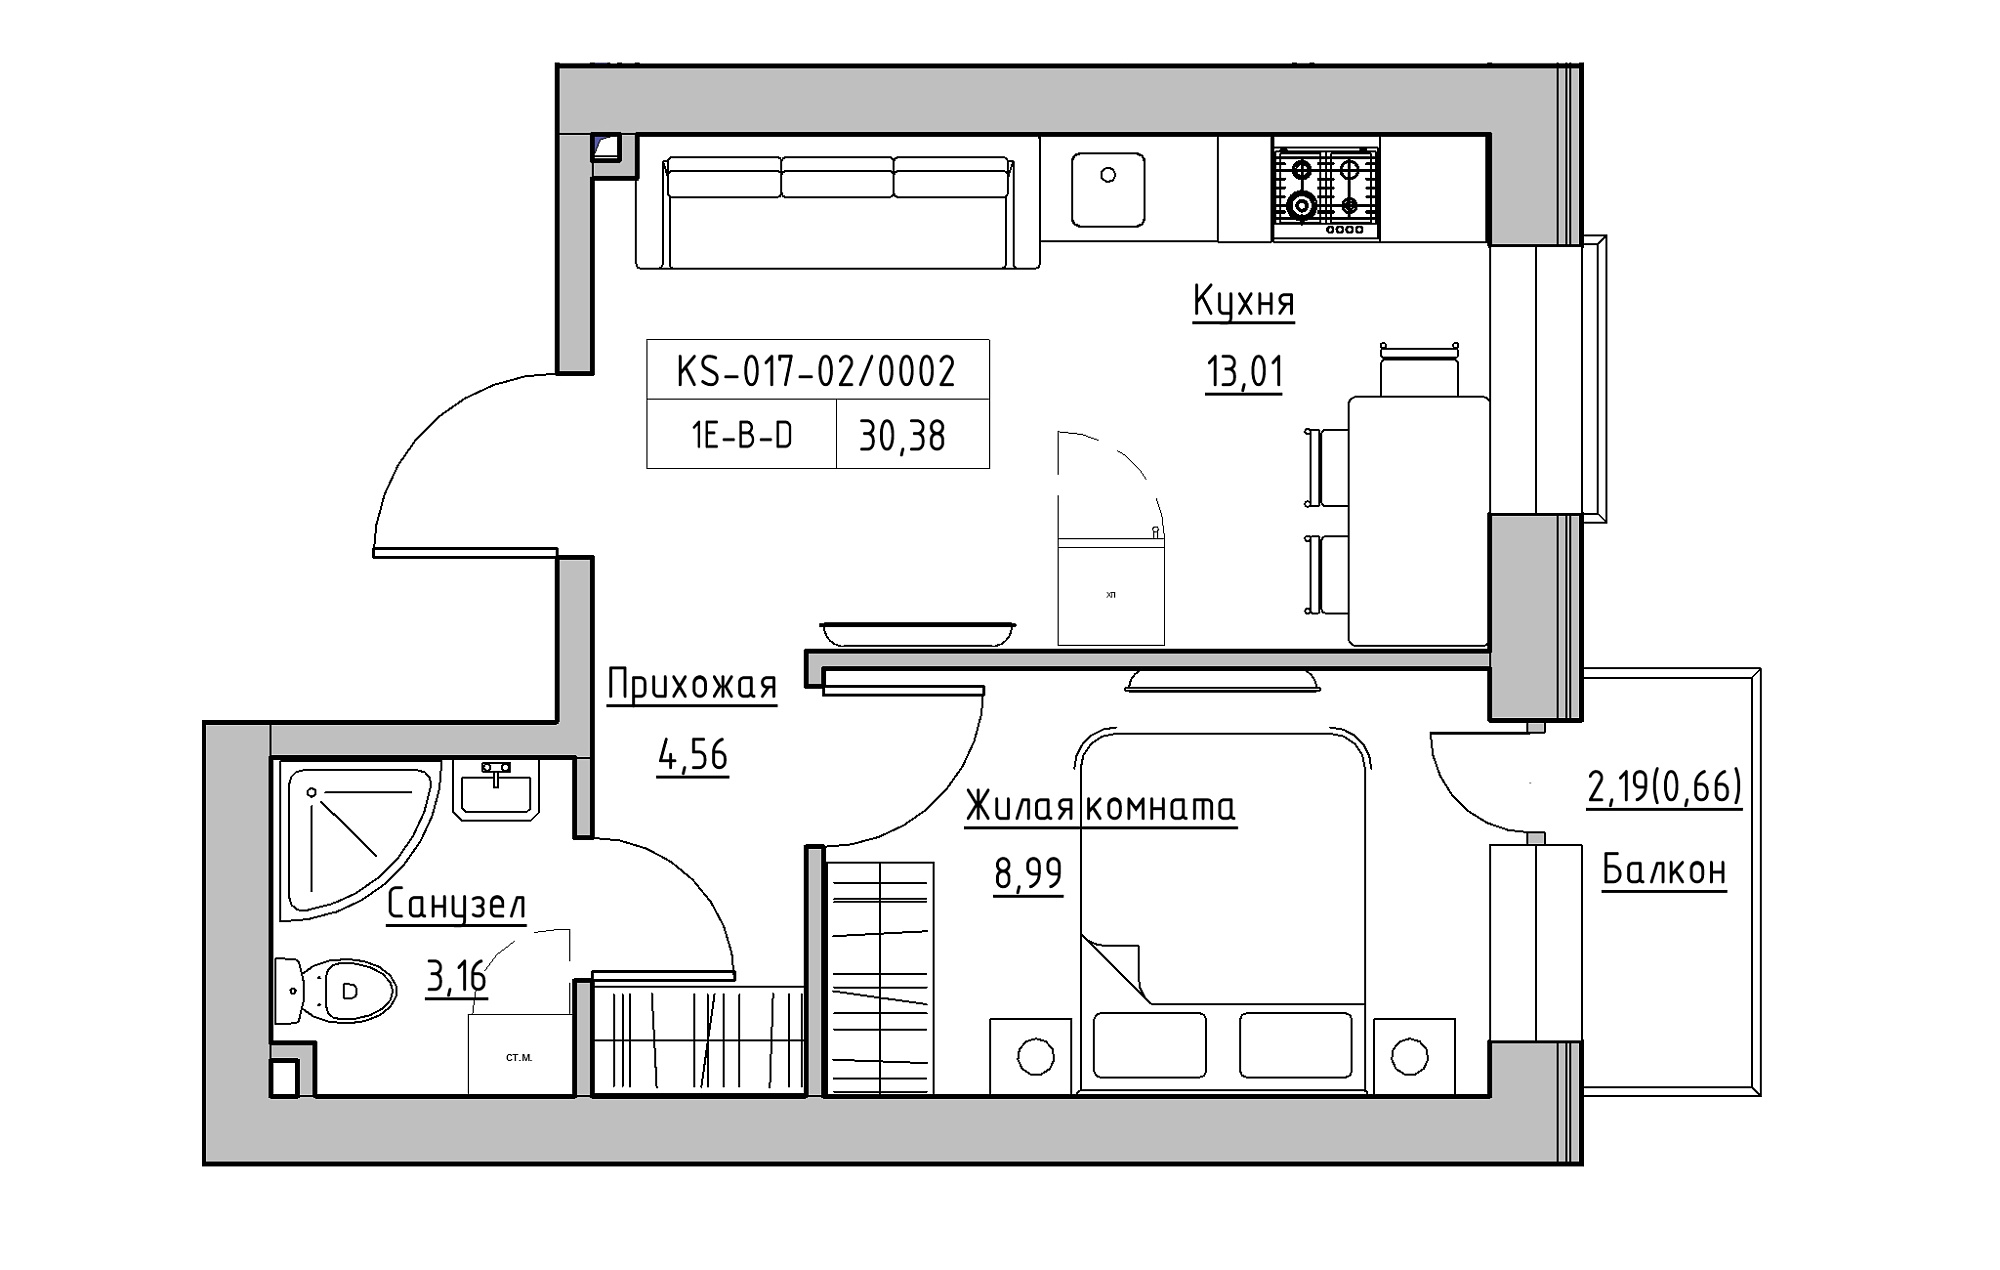 Planning 1-rm flats area 30.38m2, KS-017-02/0002.